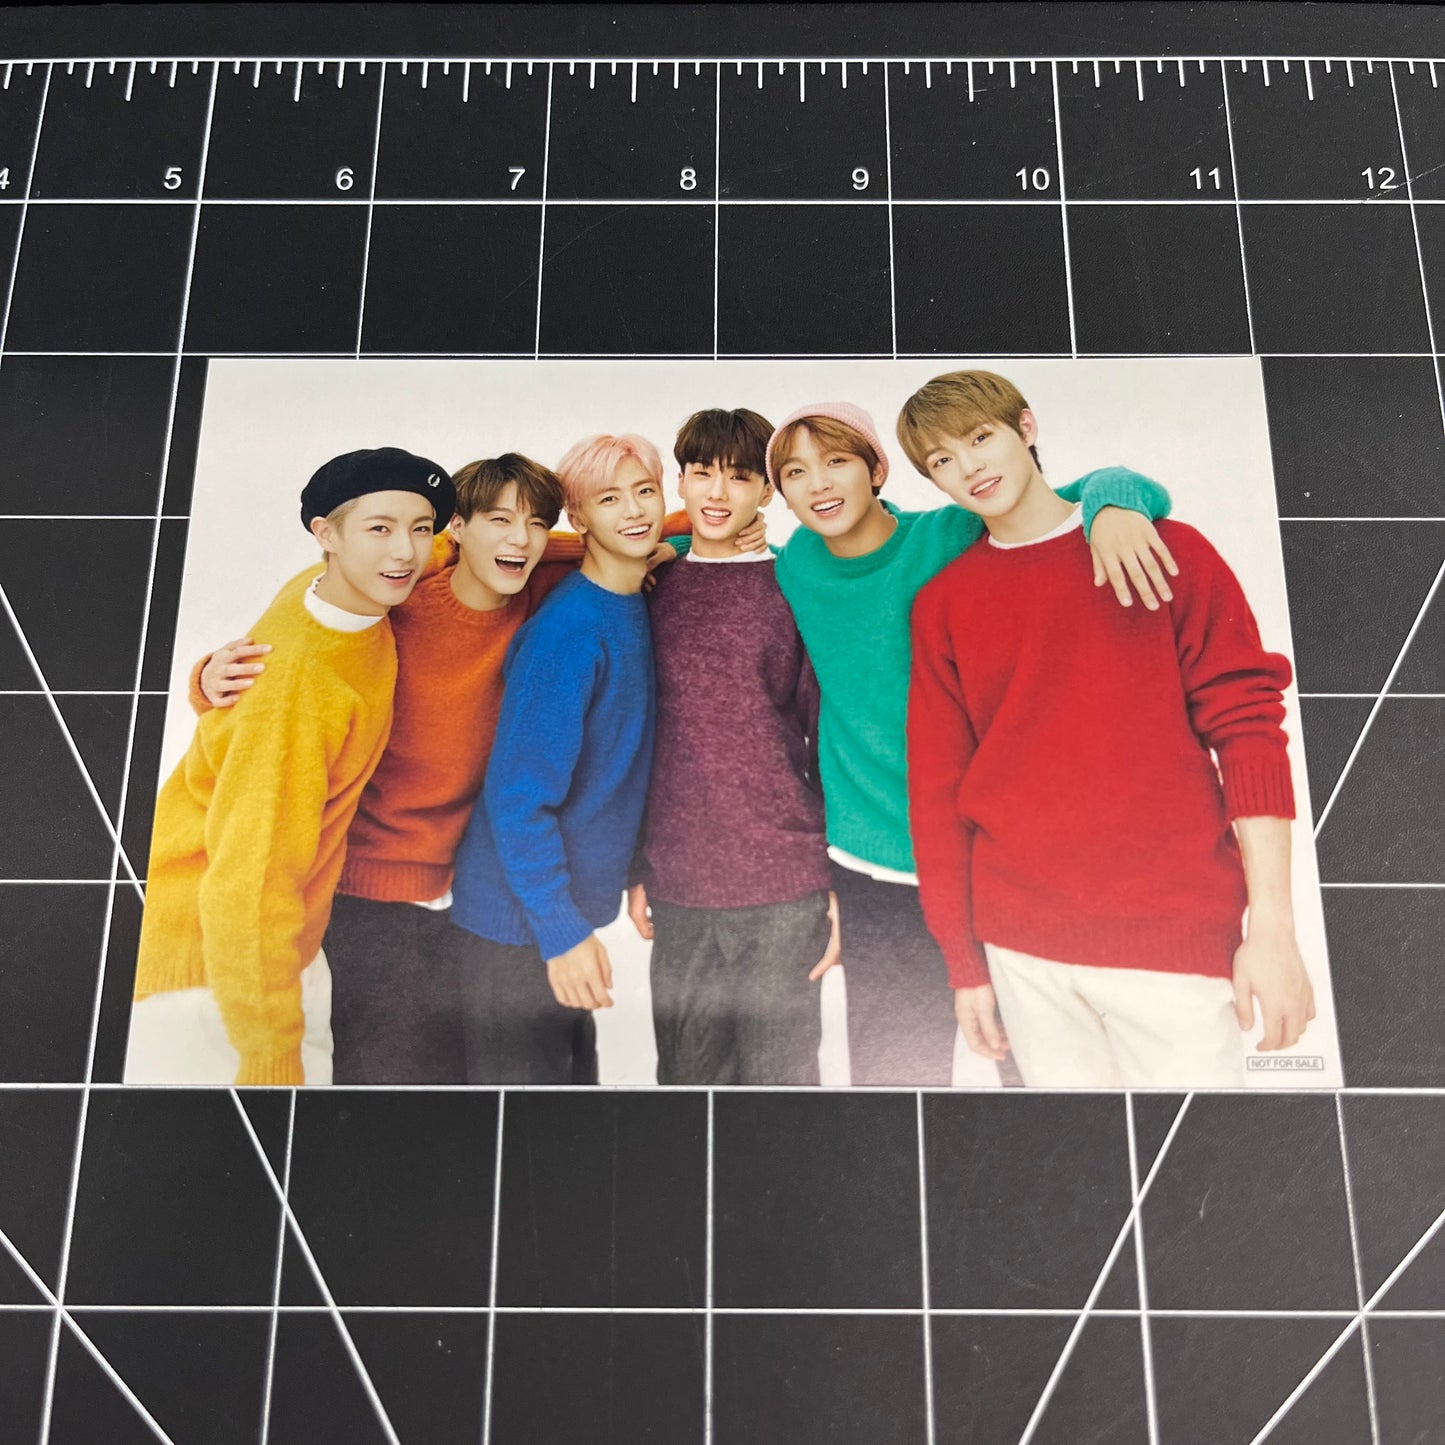 NCT Dream The 1st Mini Japanese Album The Dream - Postcard Only